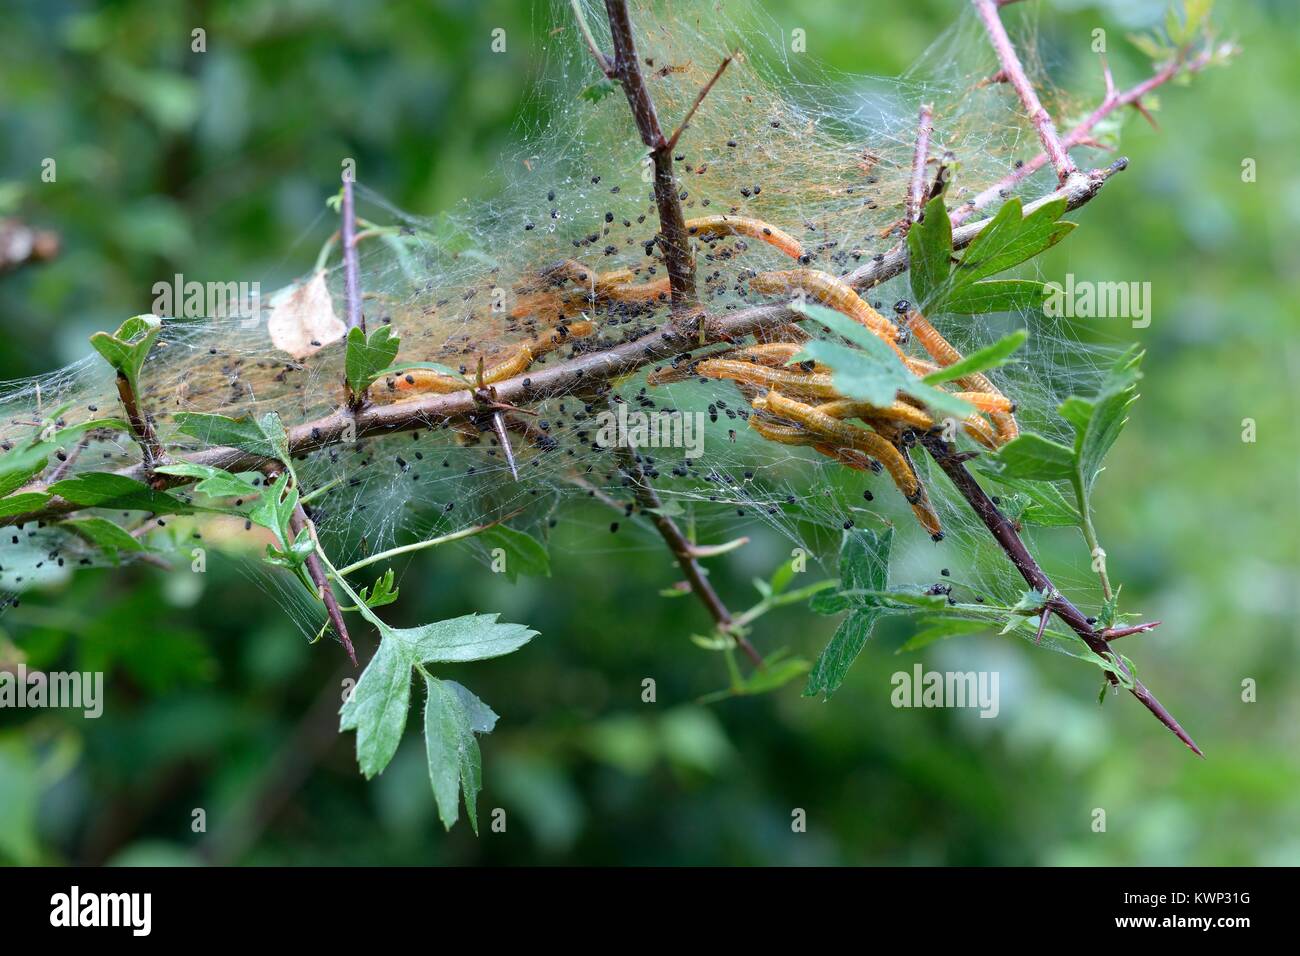 Group of Social pear sawfly (Neurotoma saltuum) larvae feeding within silk tent on Hawthorn leaves (Crateagus monogyna) in a woodland ride, UK. Stock Photo